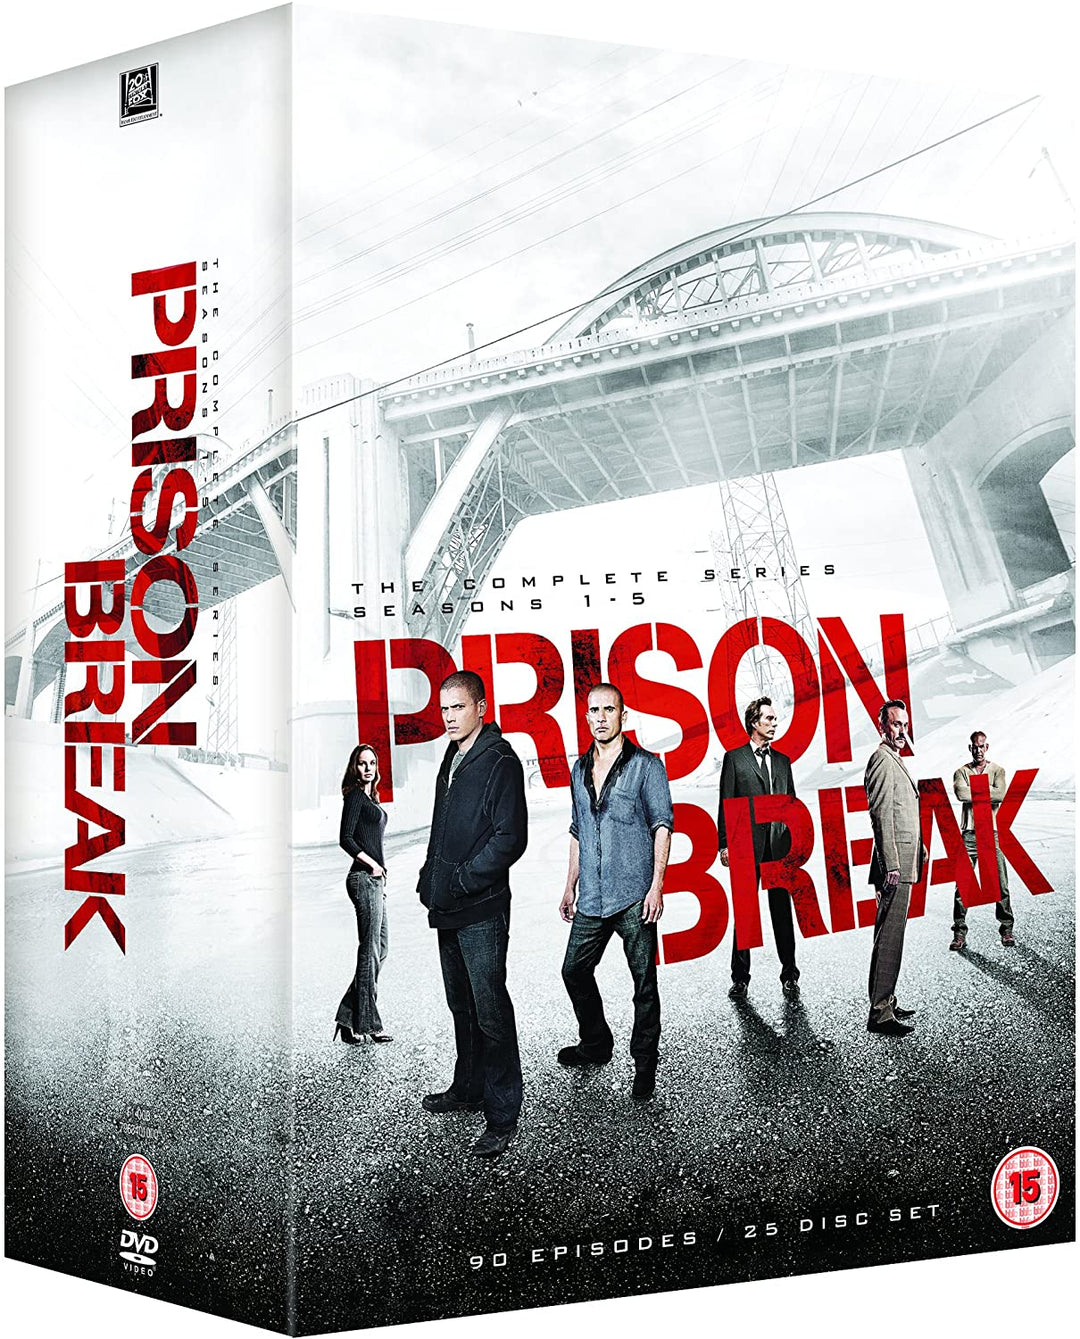 Prison Break: The Complete Series - Seasons 1-5  - Drama  [DVD]